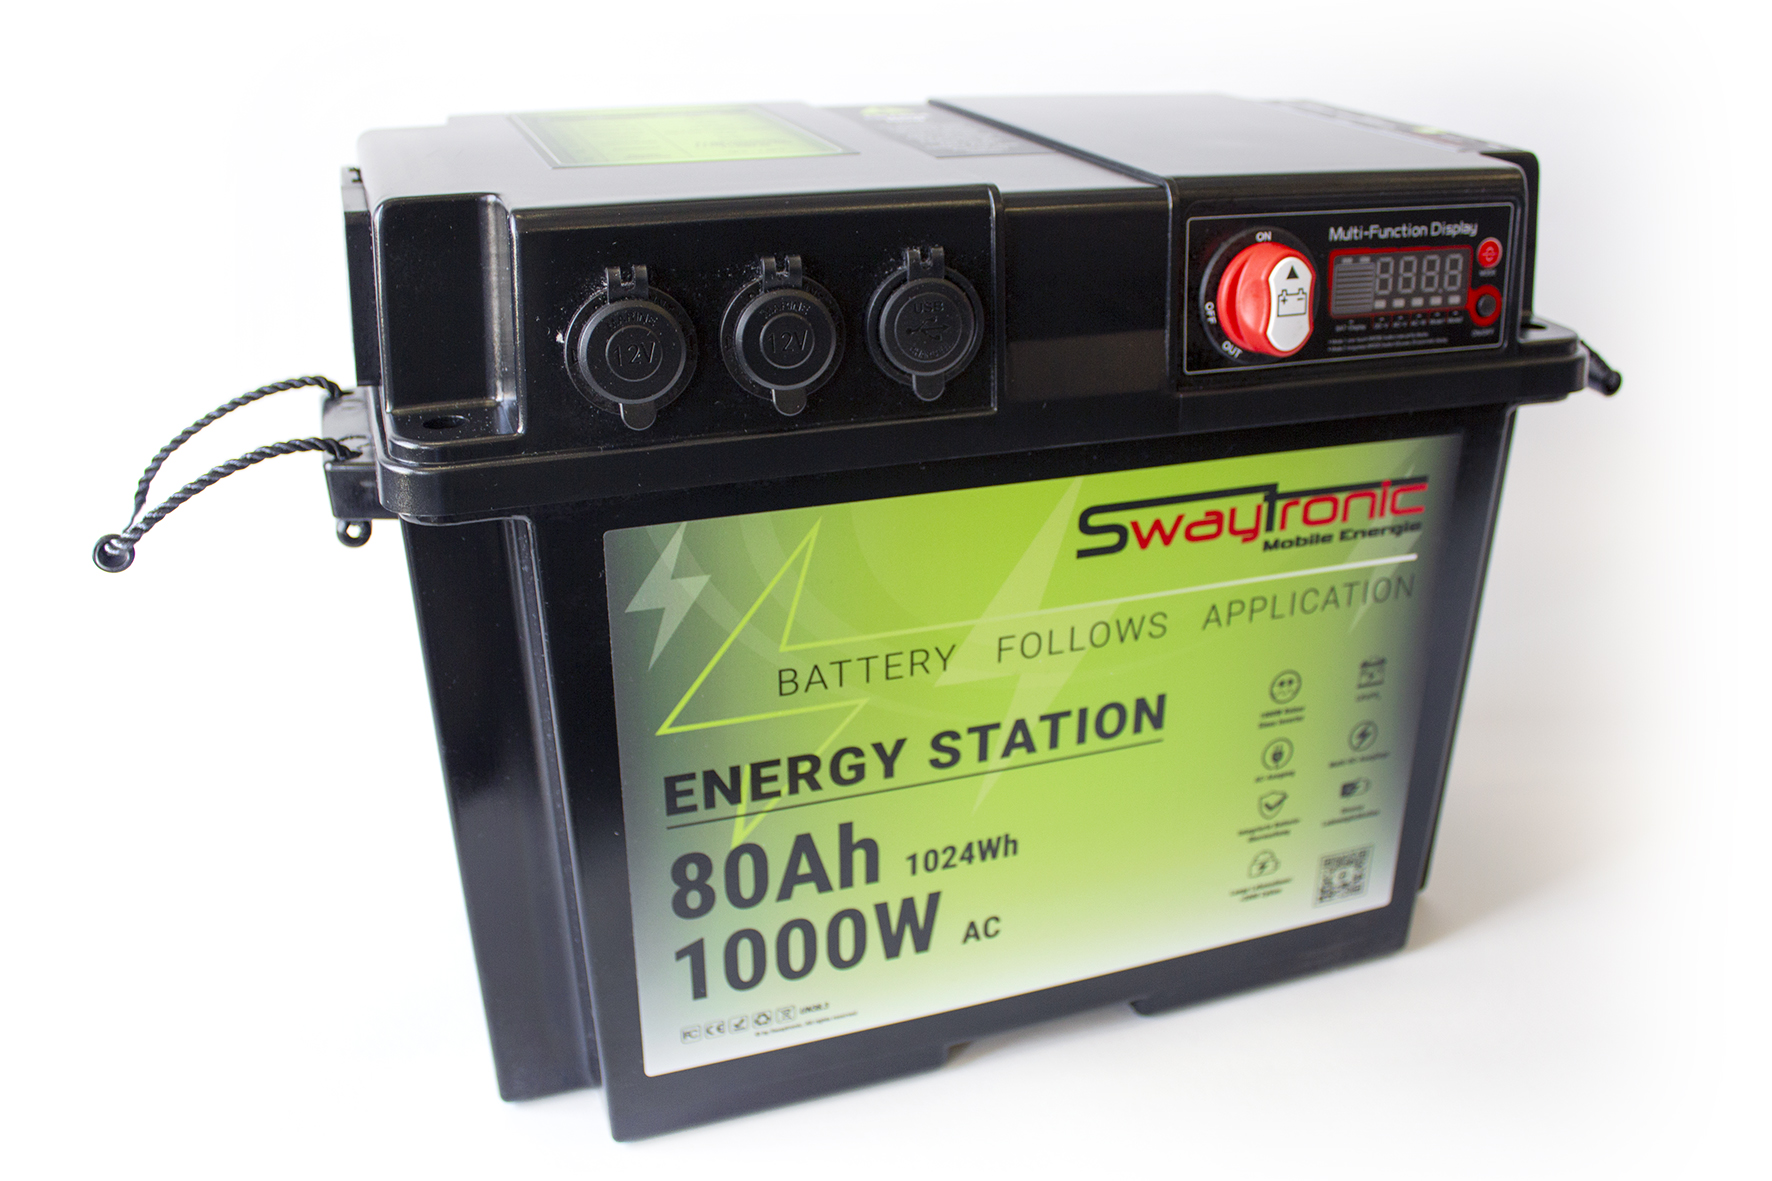 SWAYTRONIC - Energy Station 80Ah 1000W